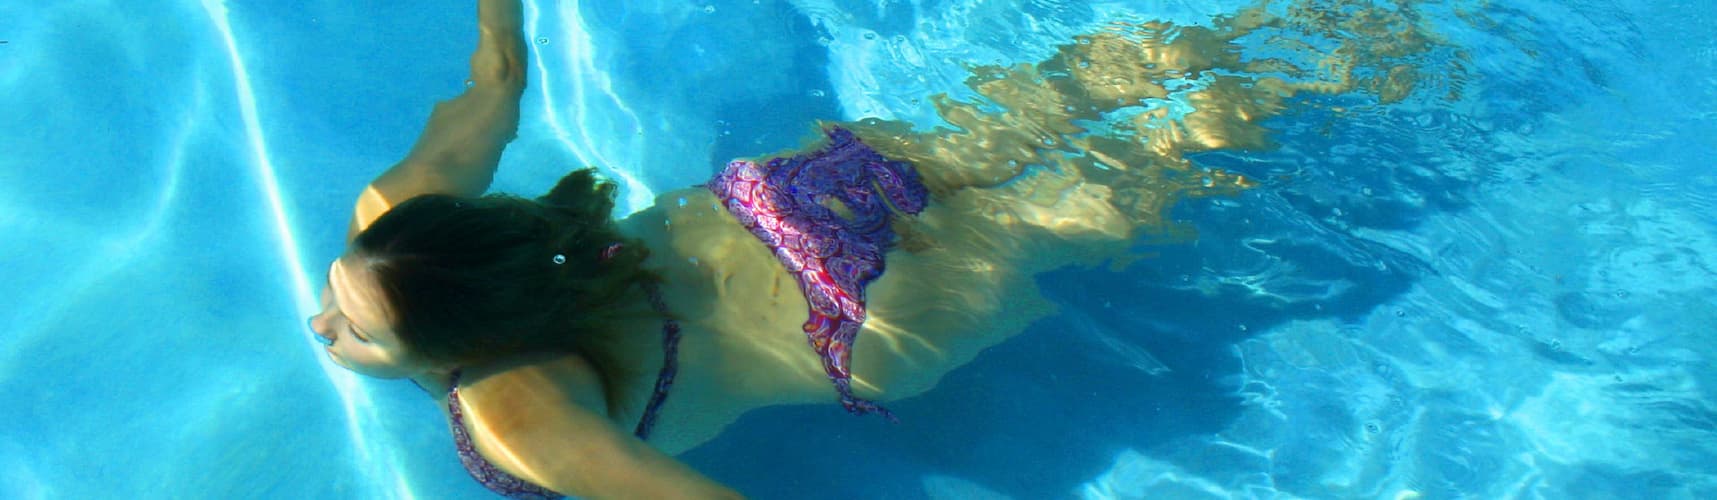 Woman Swimming In Heated Pool - Alto Pacific Pty Ltd